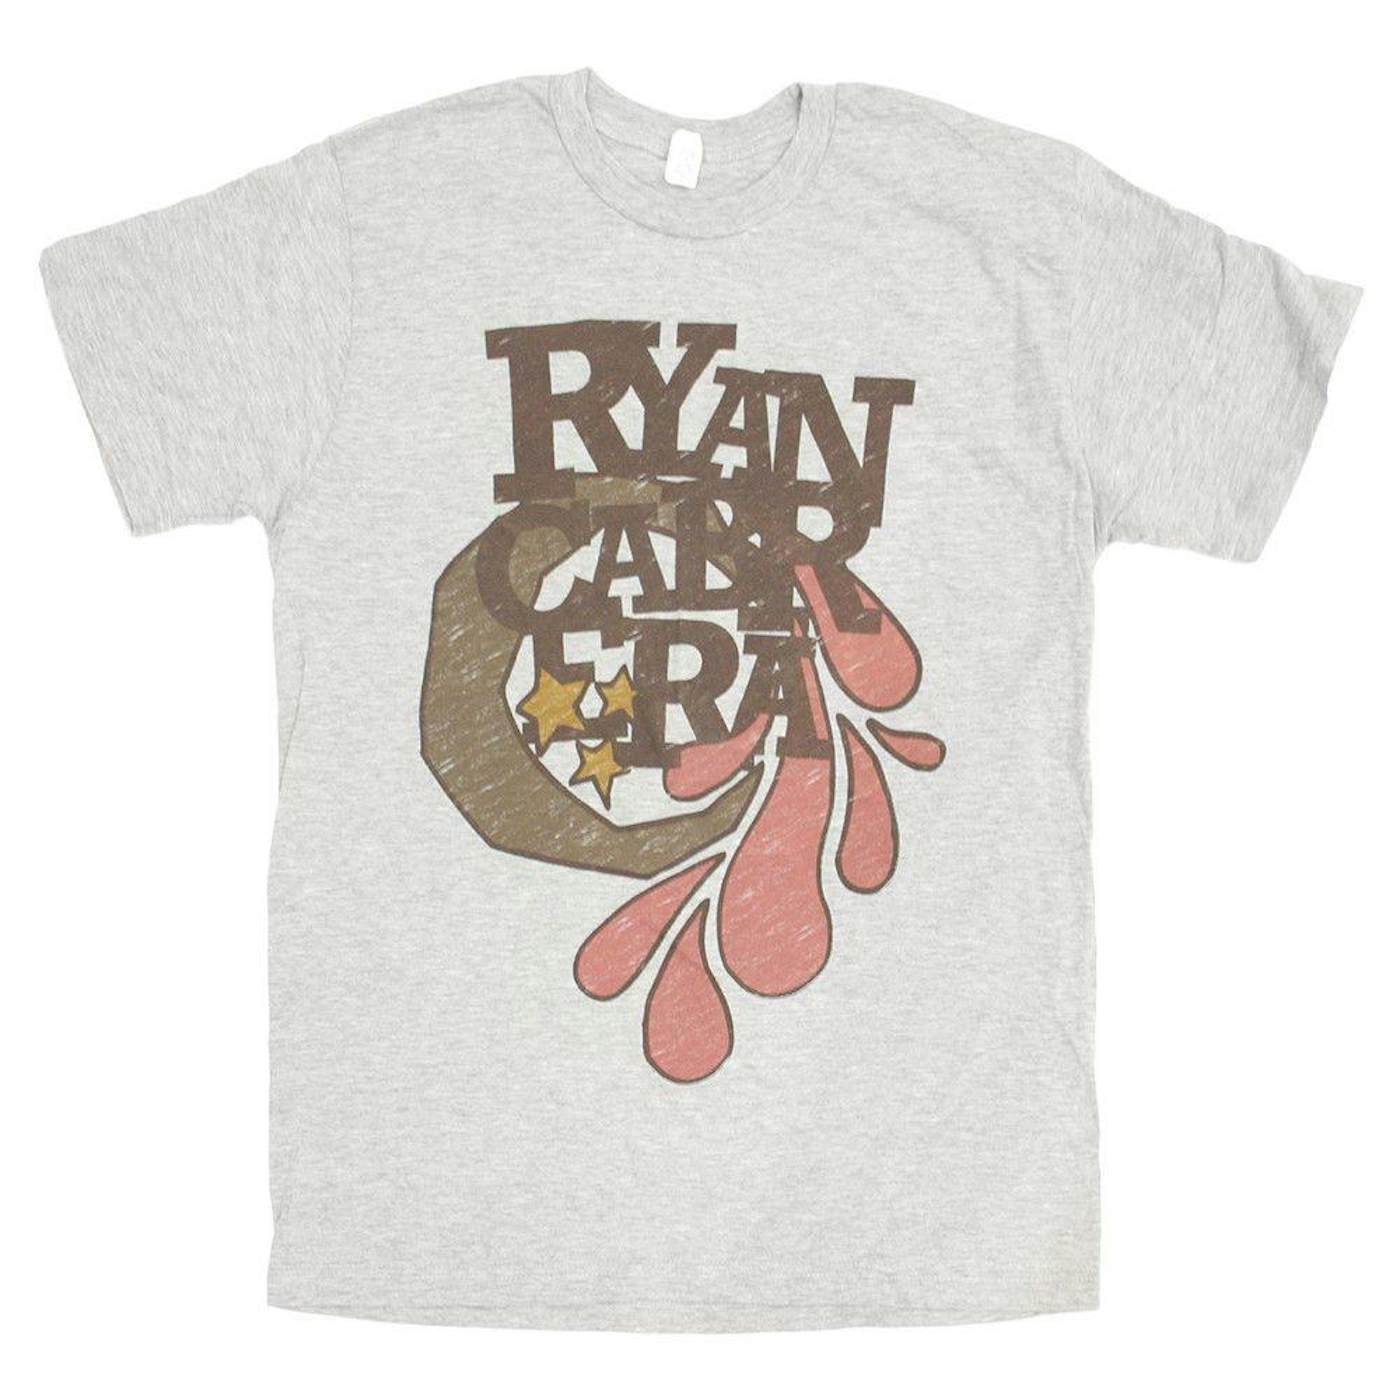 Ryan Cabrera Moon Doodle T-shirt - Men's